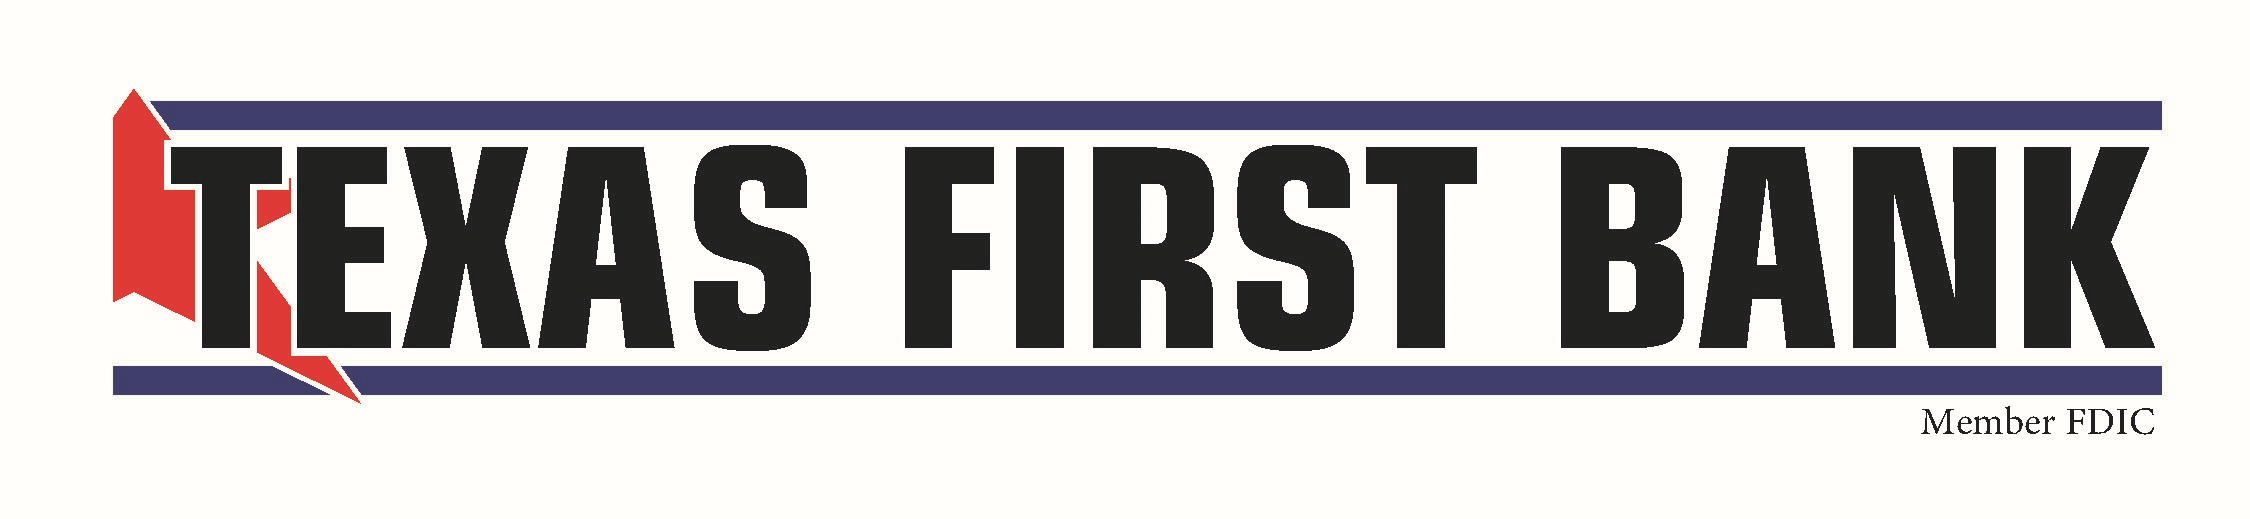 Texas First Bank Company Logo